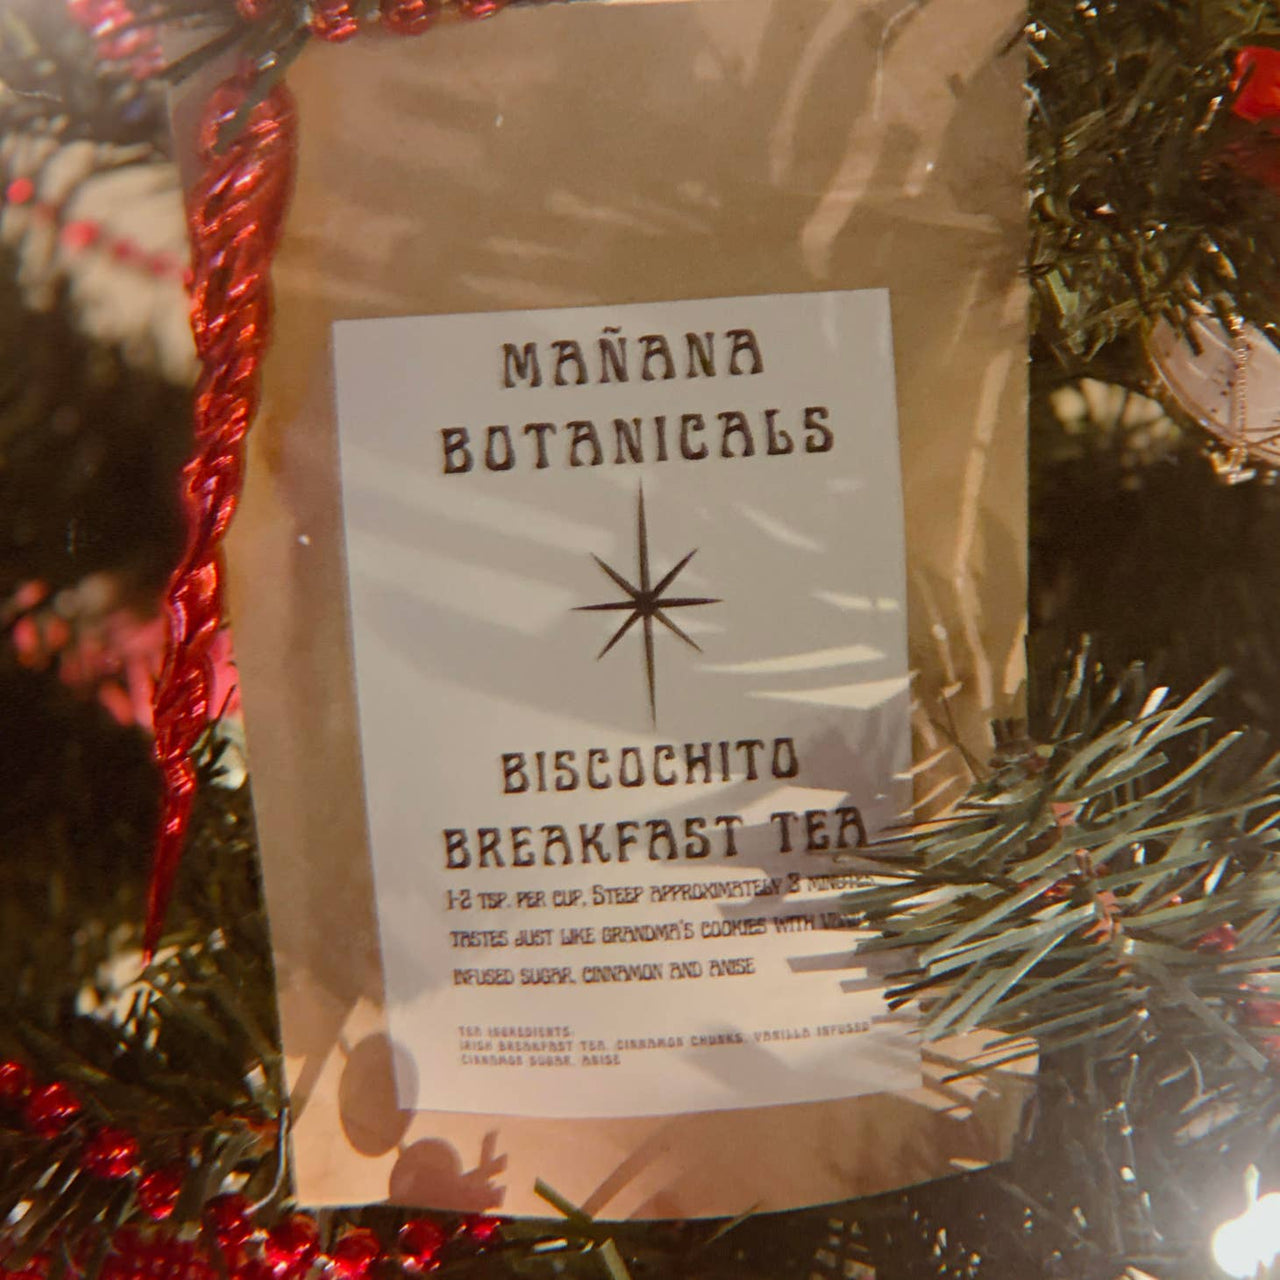 Manana Botanicals - Biscochito Breakfast Tea (1.5 oz)